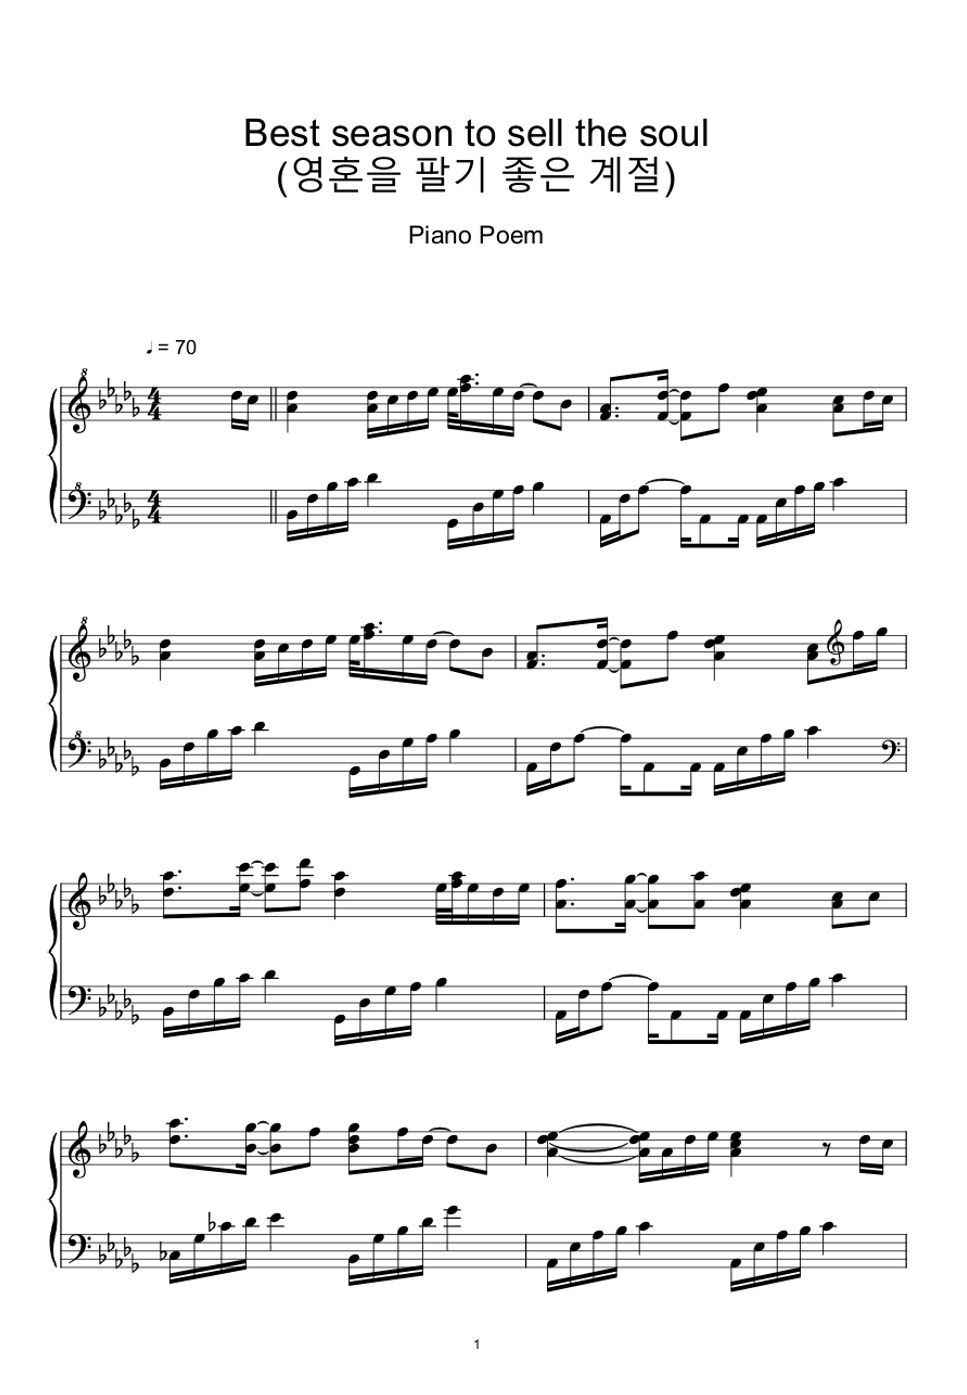 Piano Poem - Best season to sell the soul (영혼을 팔기 좋은 계절) (Sheet Music, MIDI,) by sayu